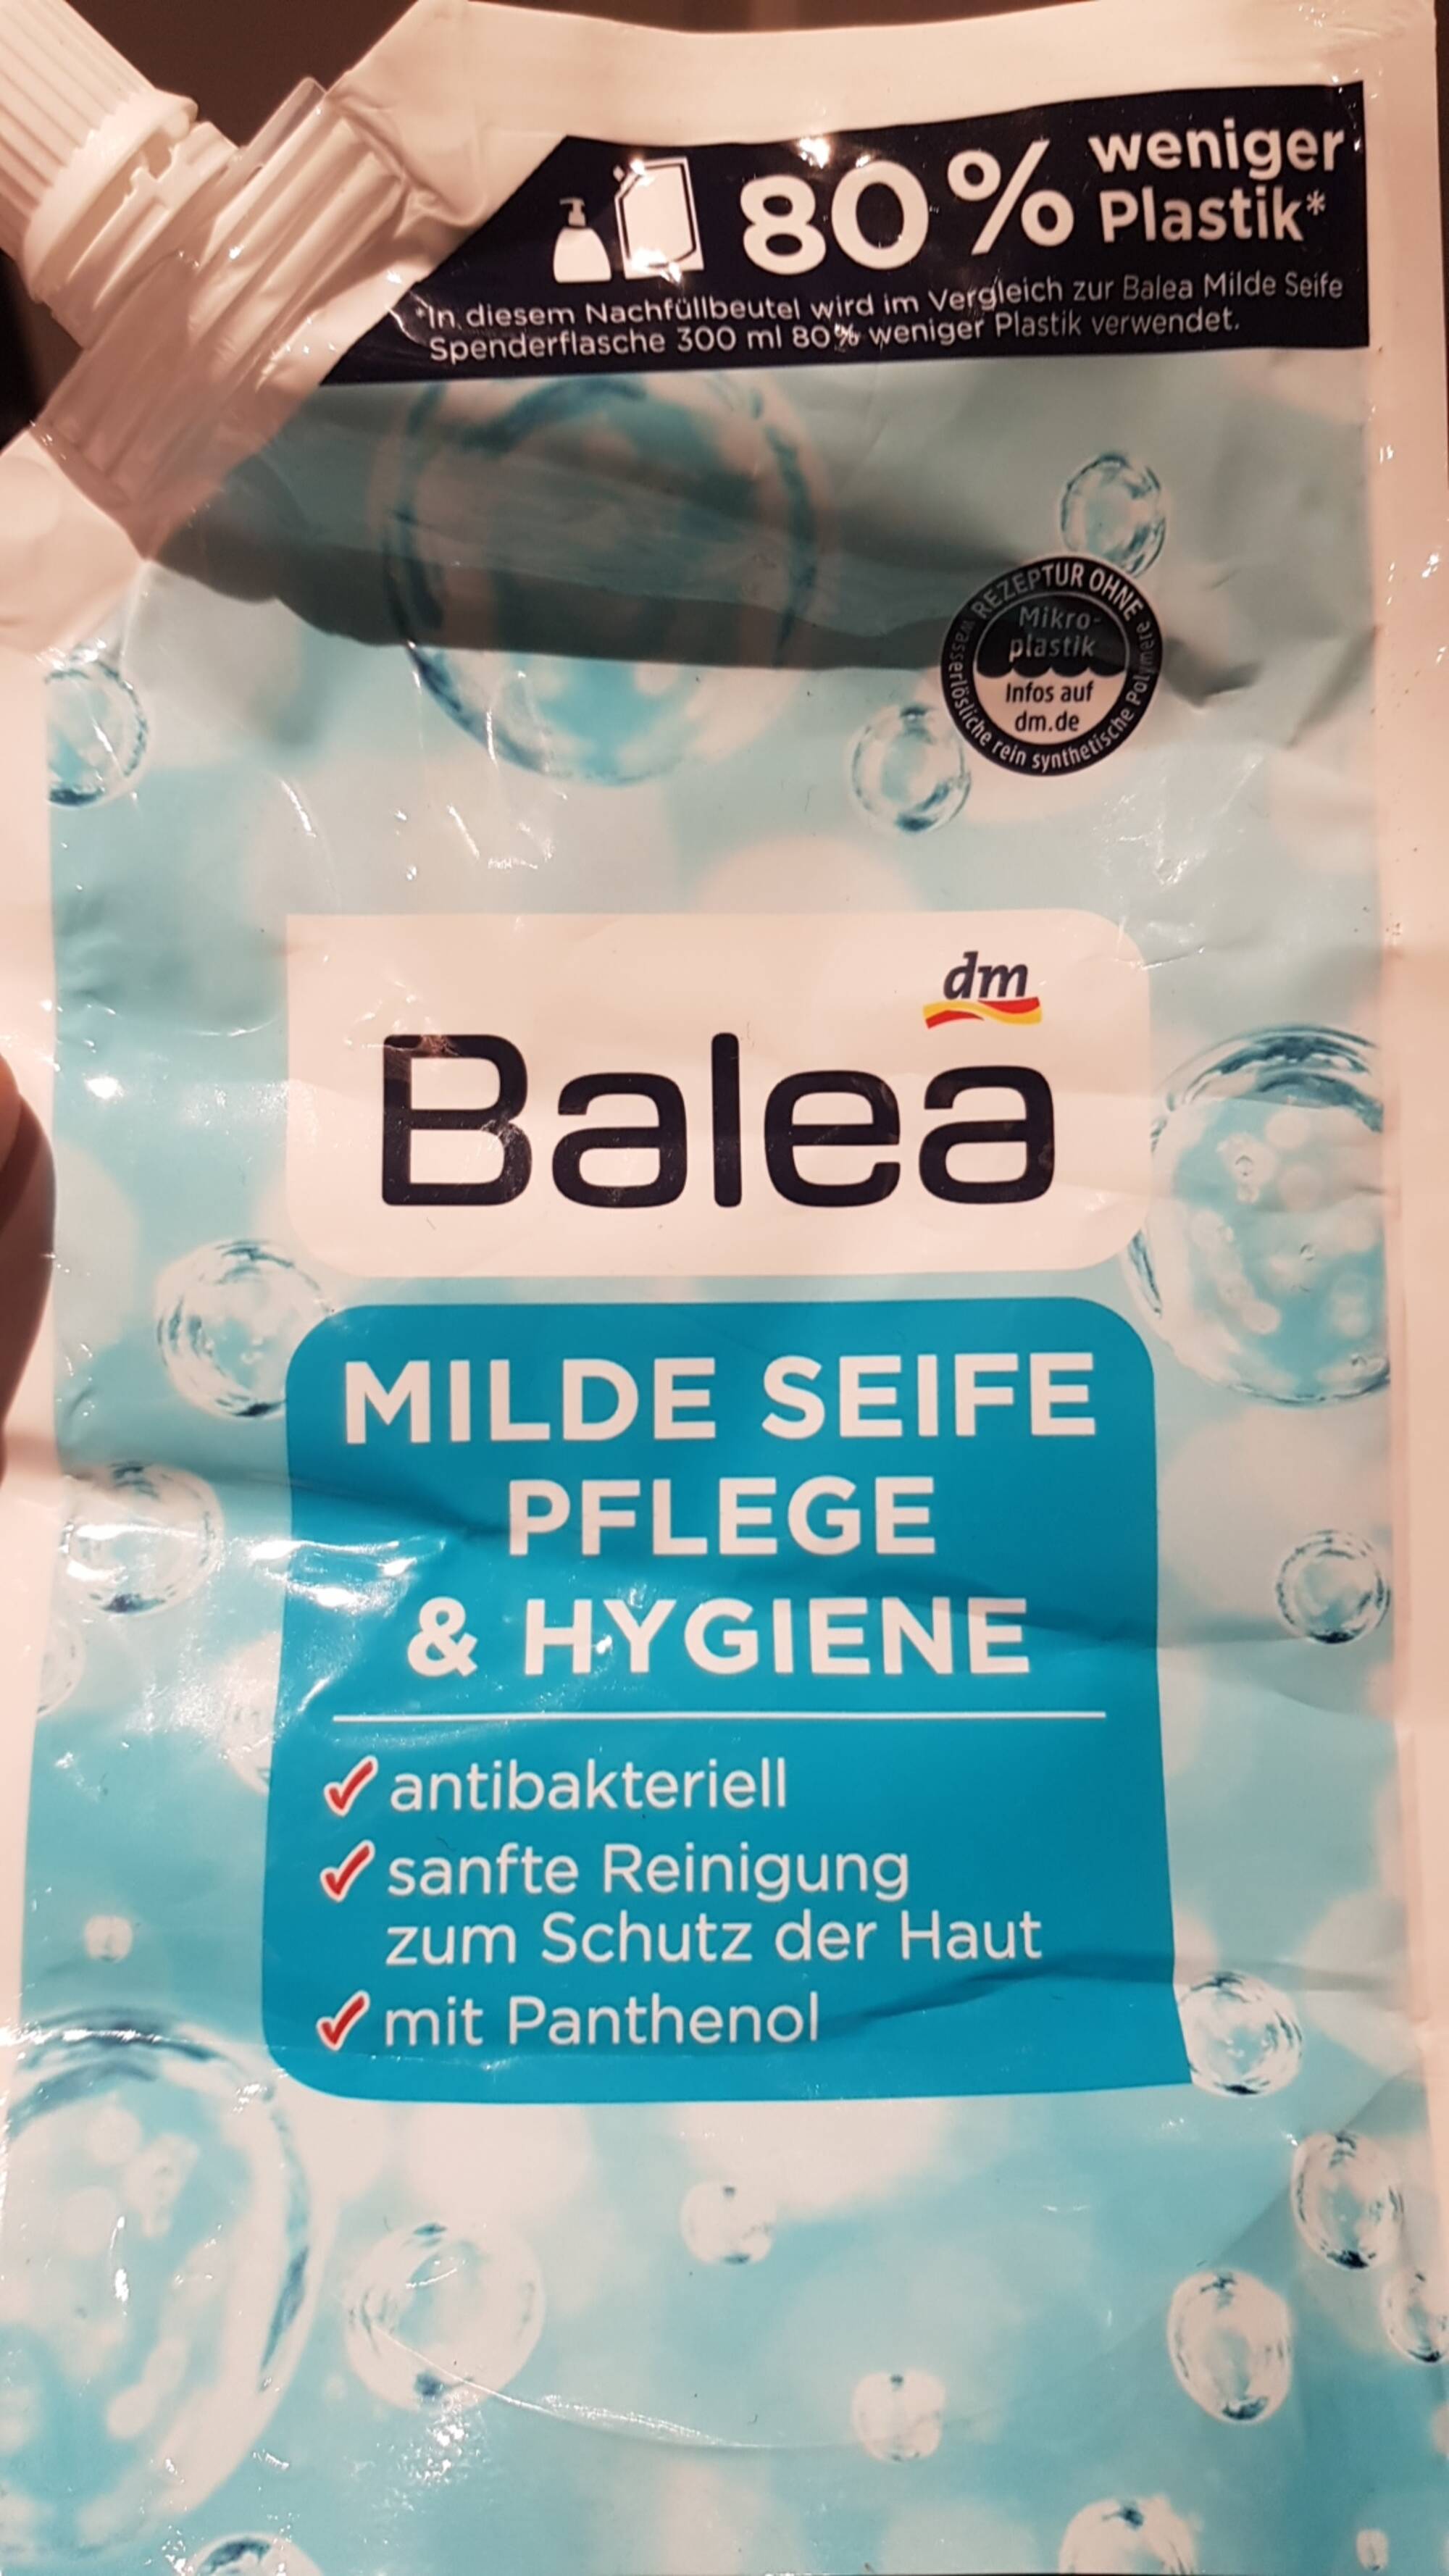 BALEA - Milde seife pflege & hygiene 